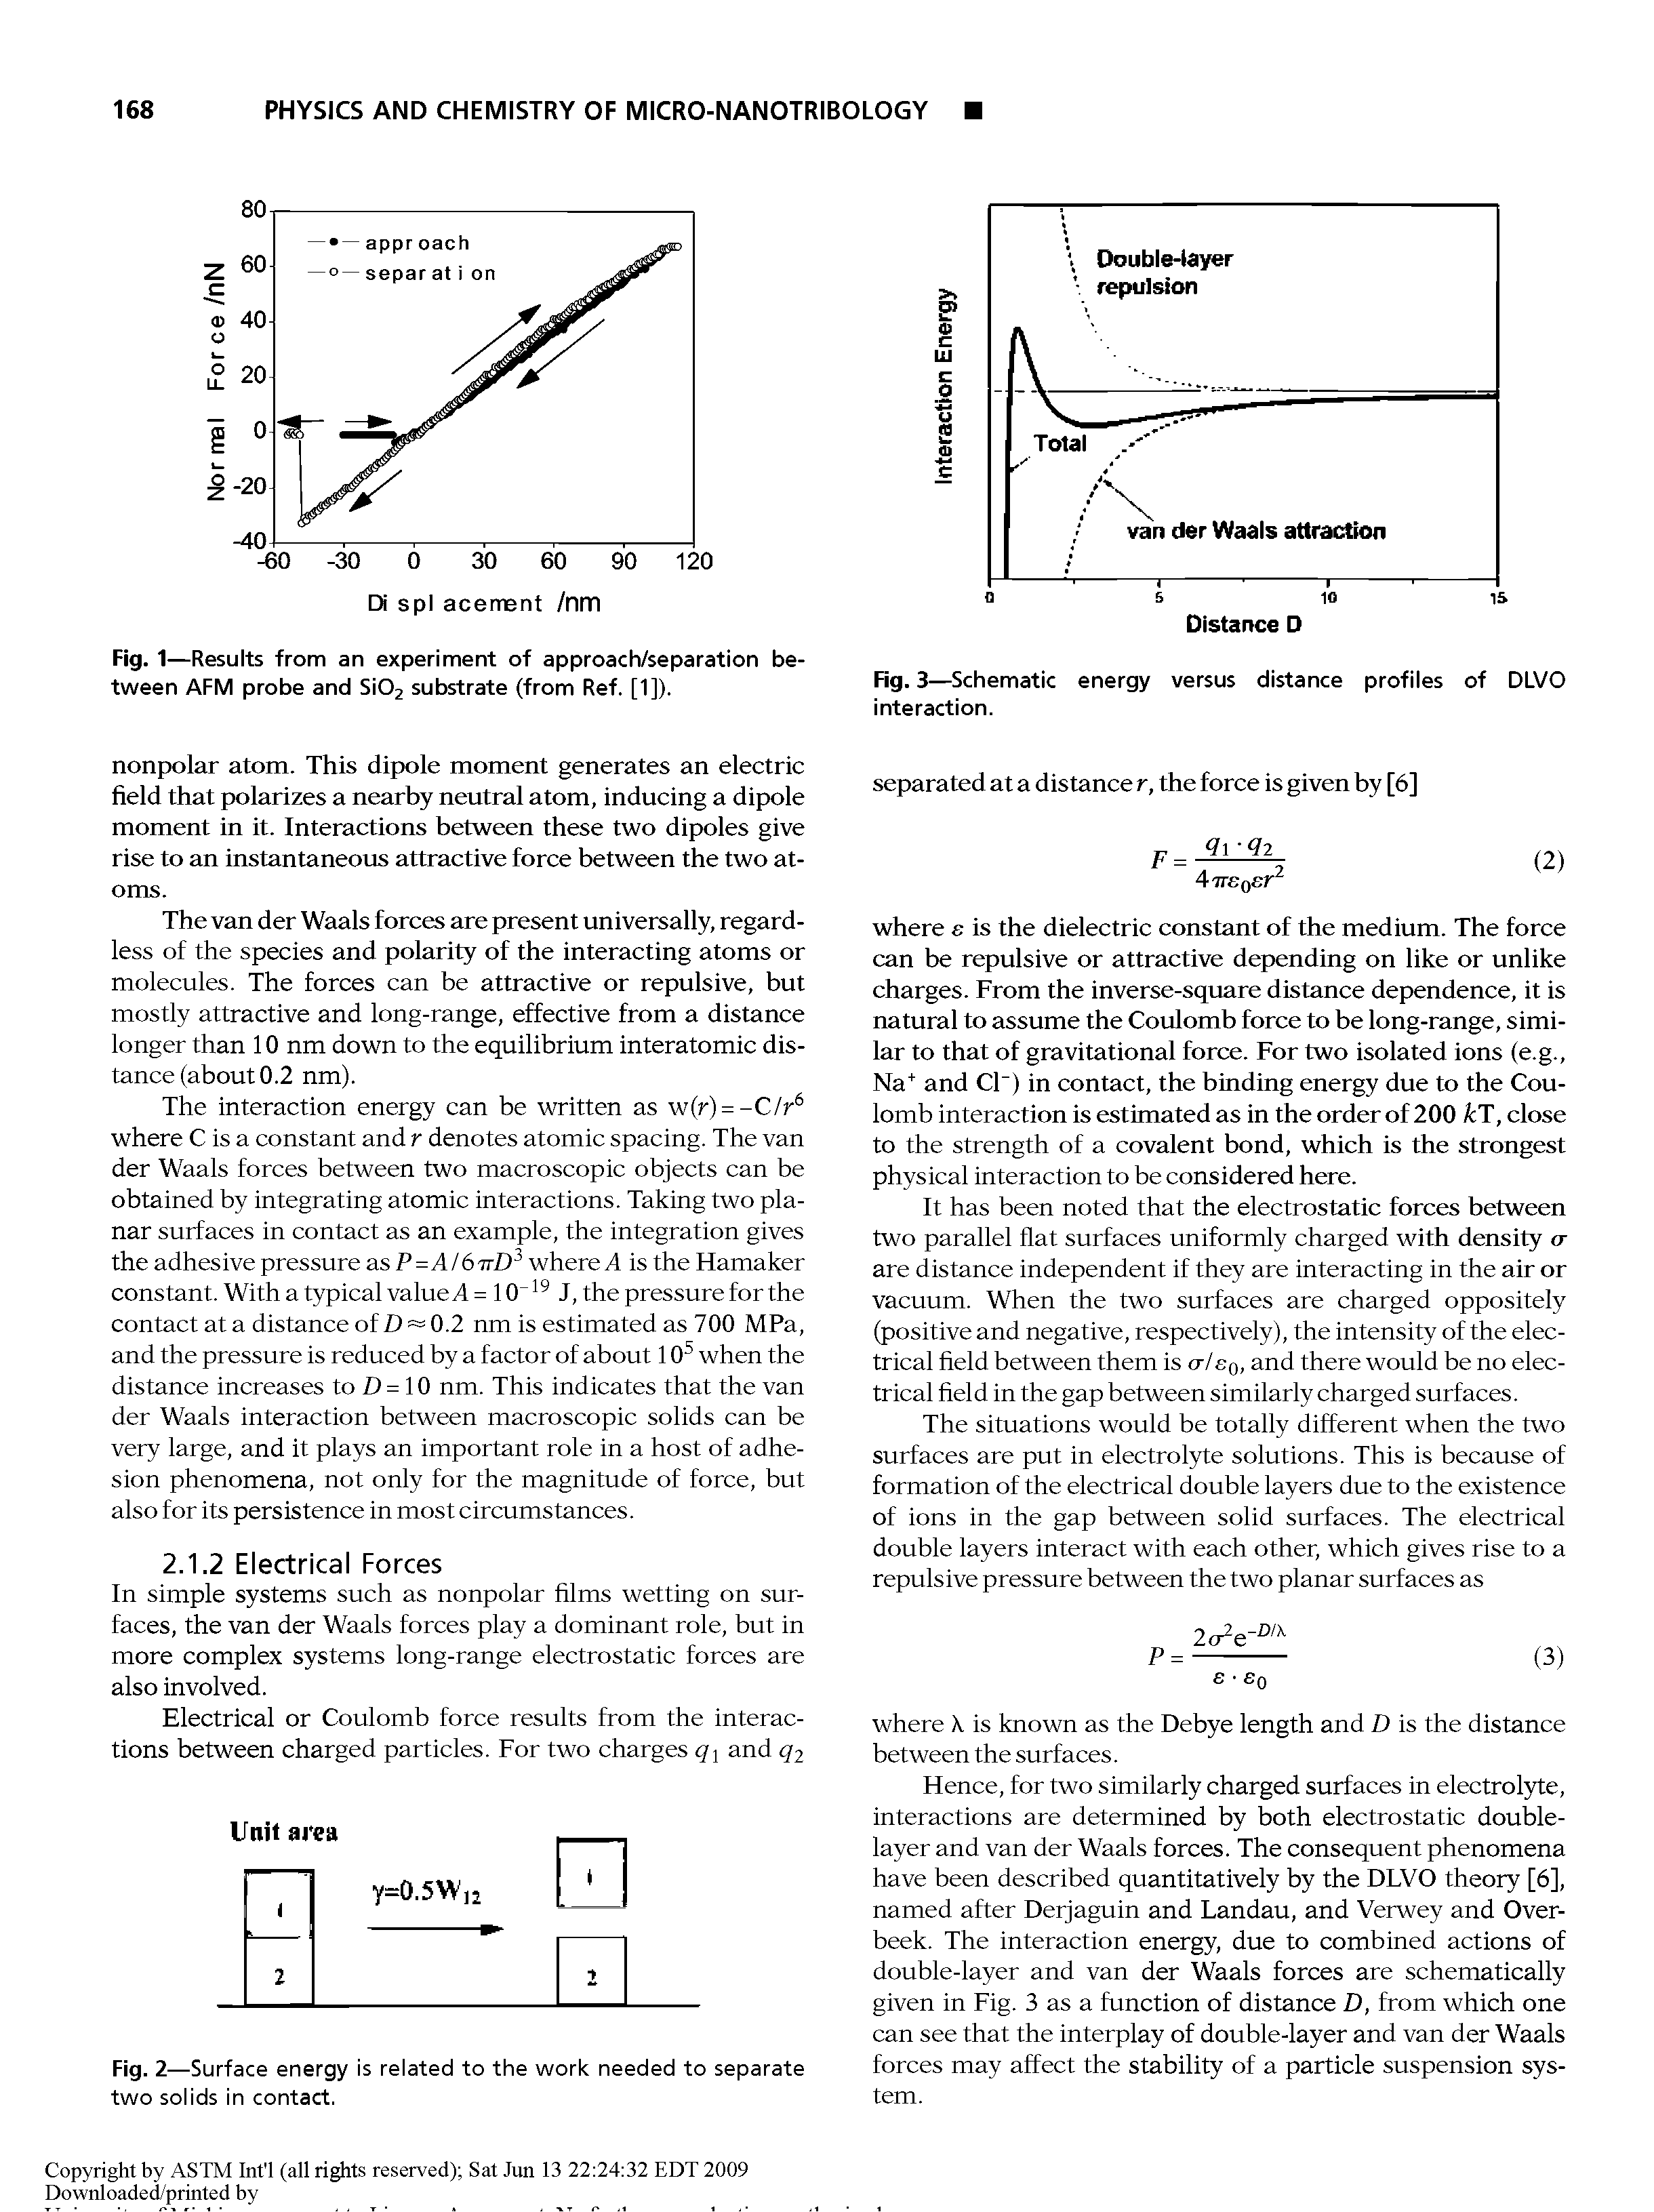 Fig. 3 —Schematic energy versus distance profiles of DLVO interaction.